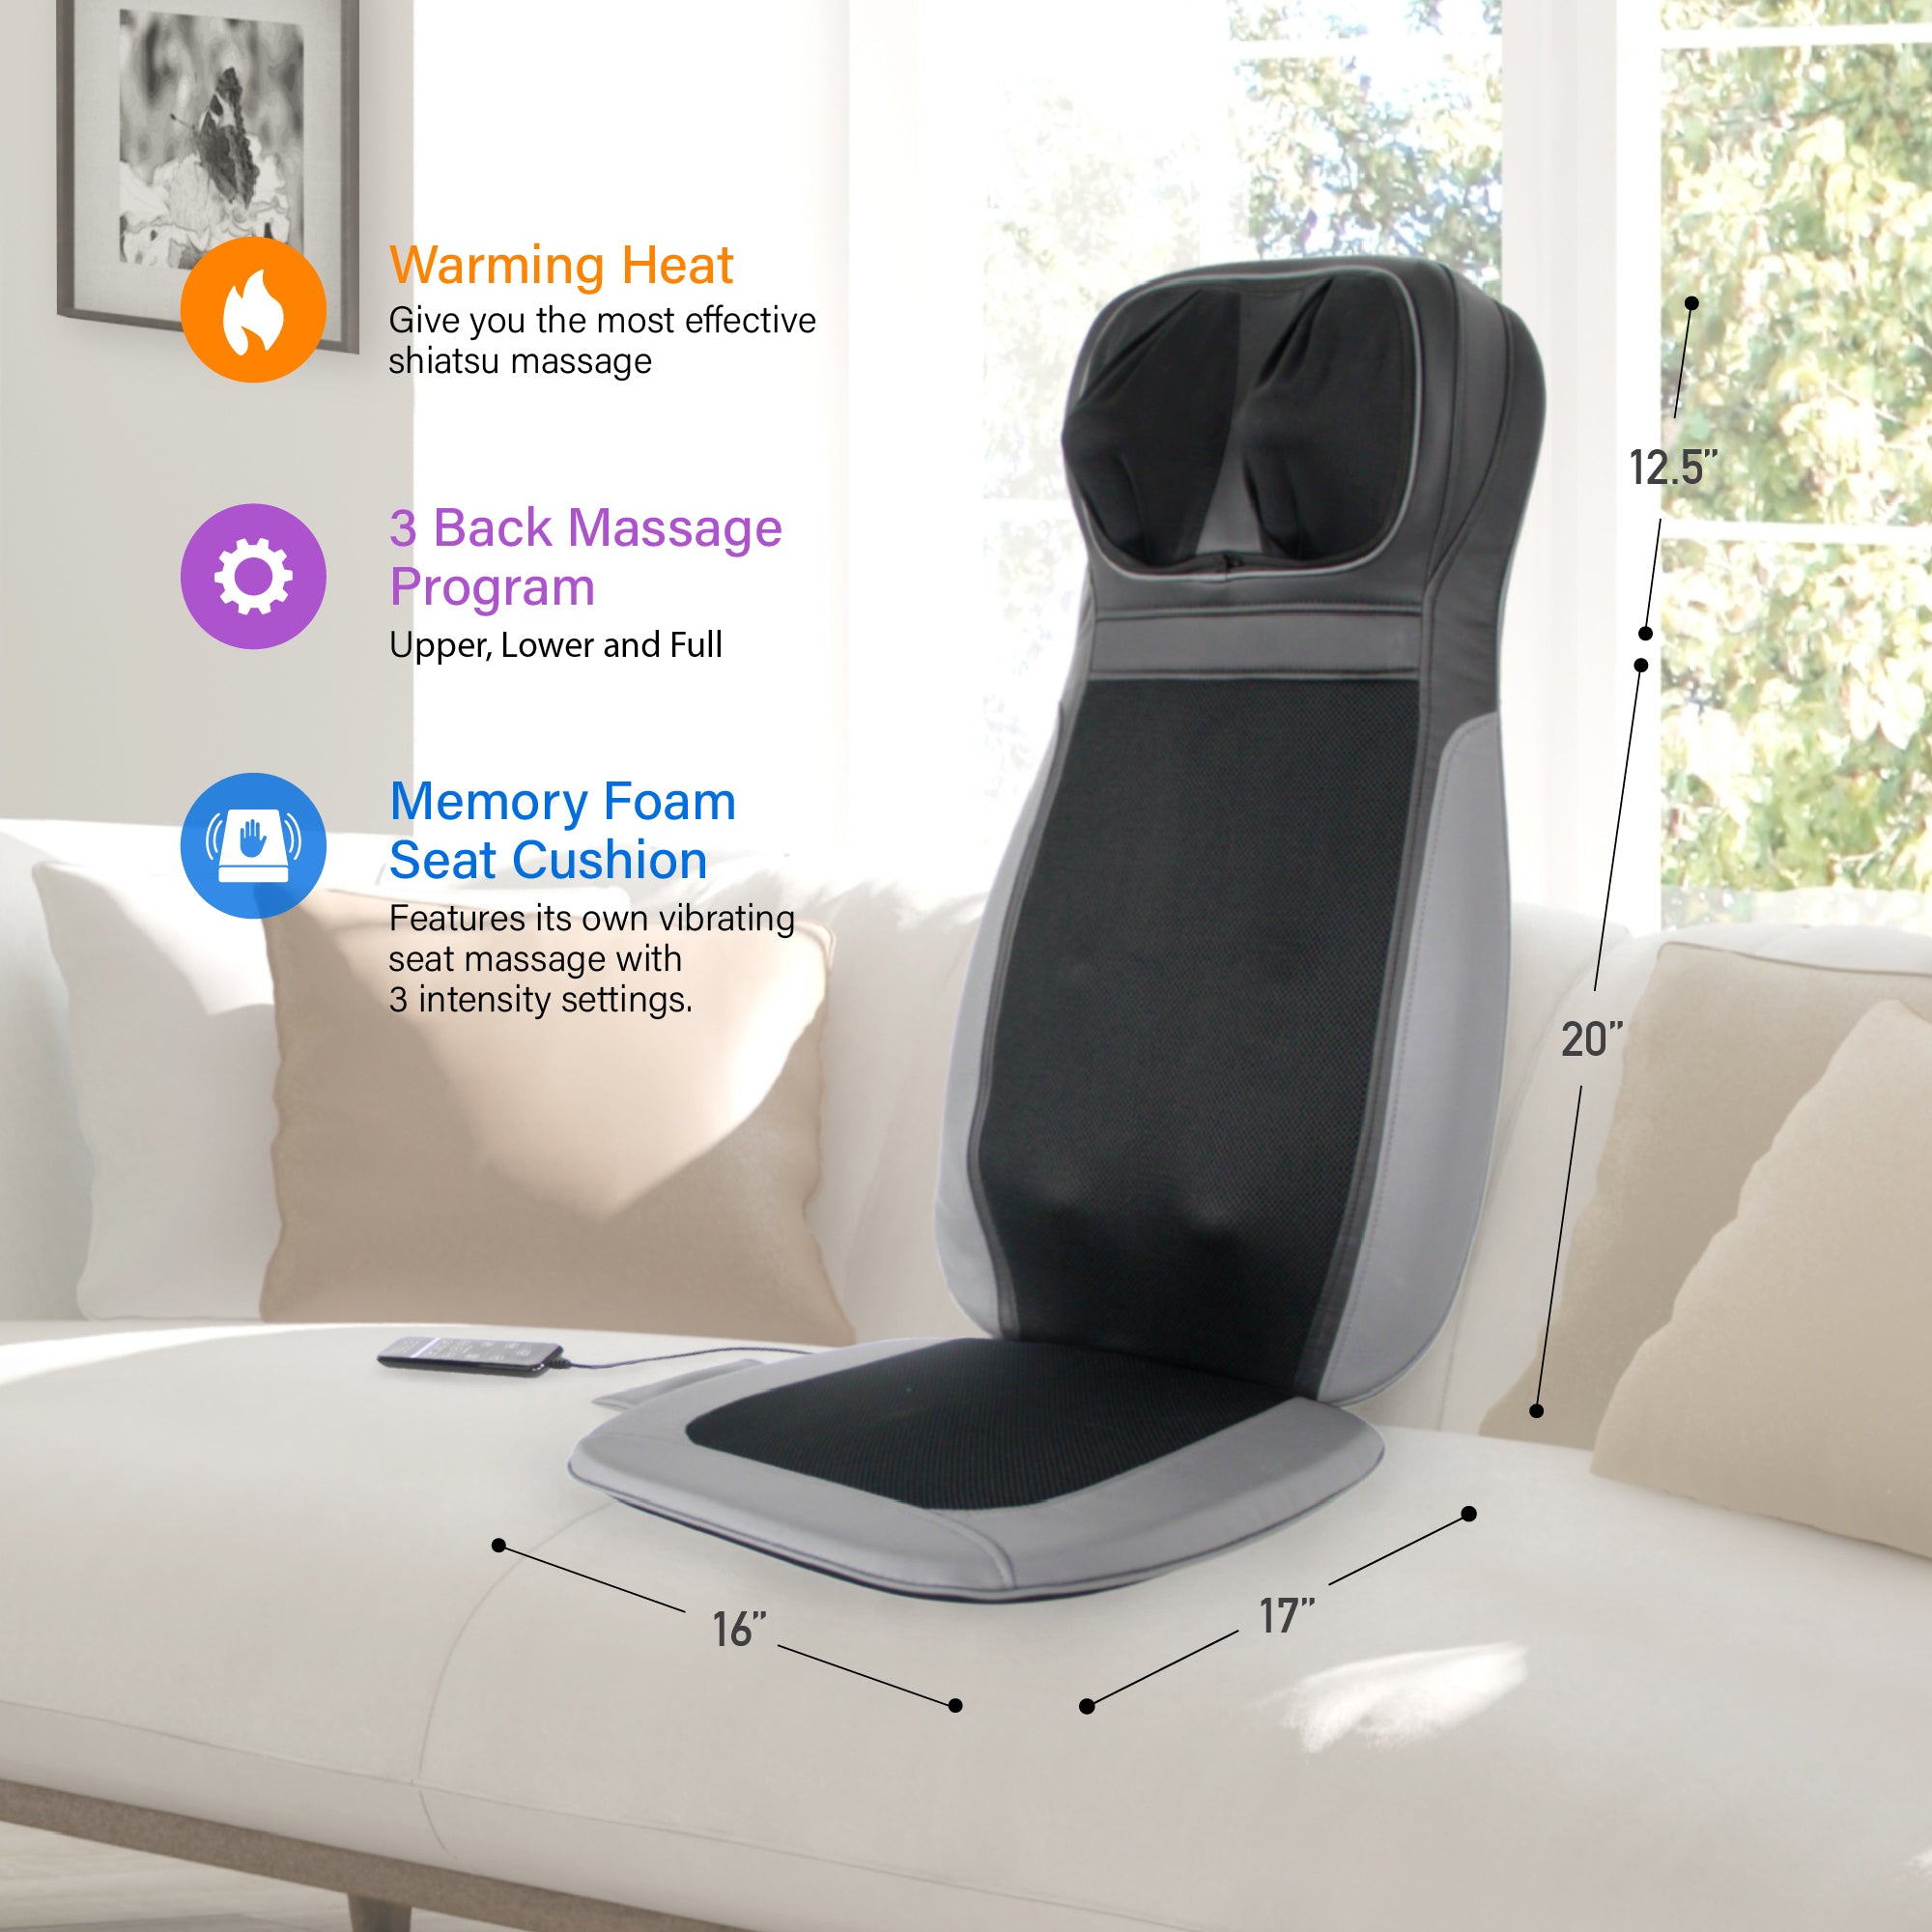 Comfier Vibration Massage Seat Cushion,Back Massager with Heat - 2206g, Size: One size, Gray